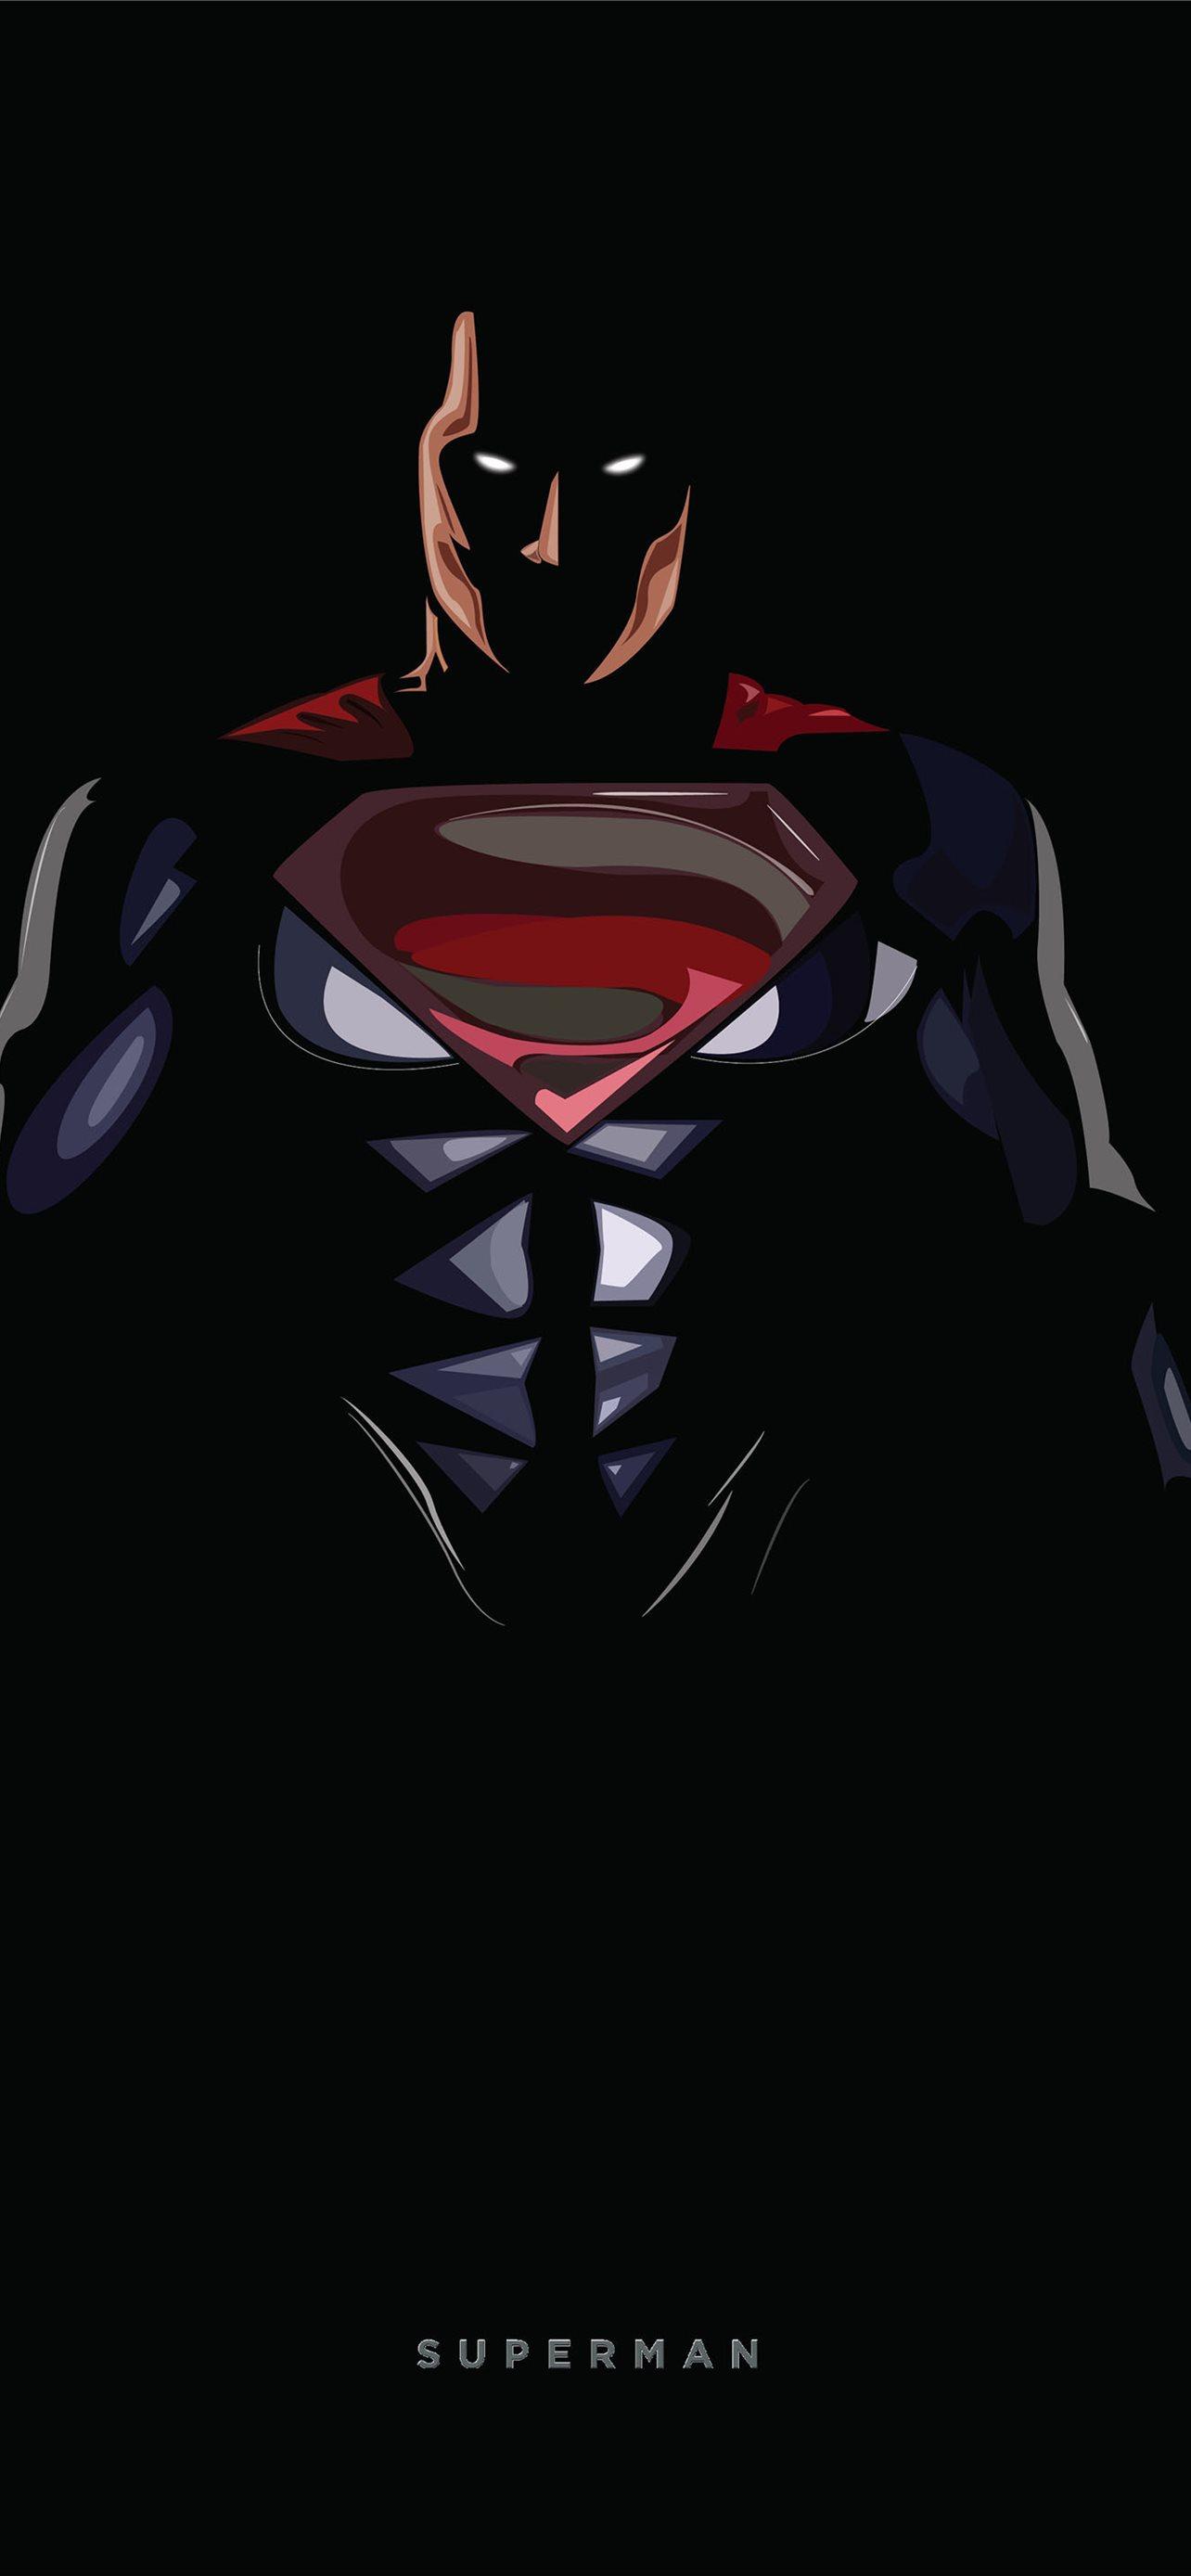 superman dark minimal lg v30 lg g6 hd image backgr iPhone